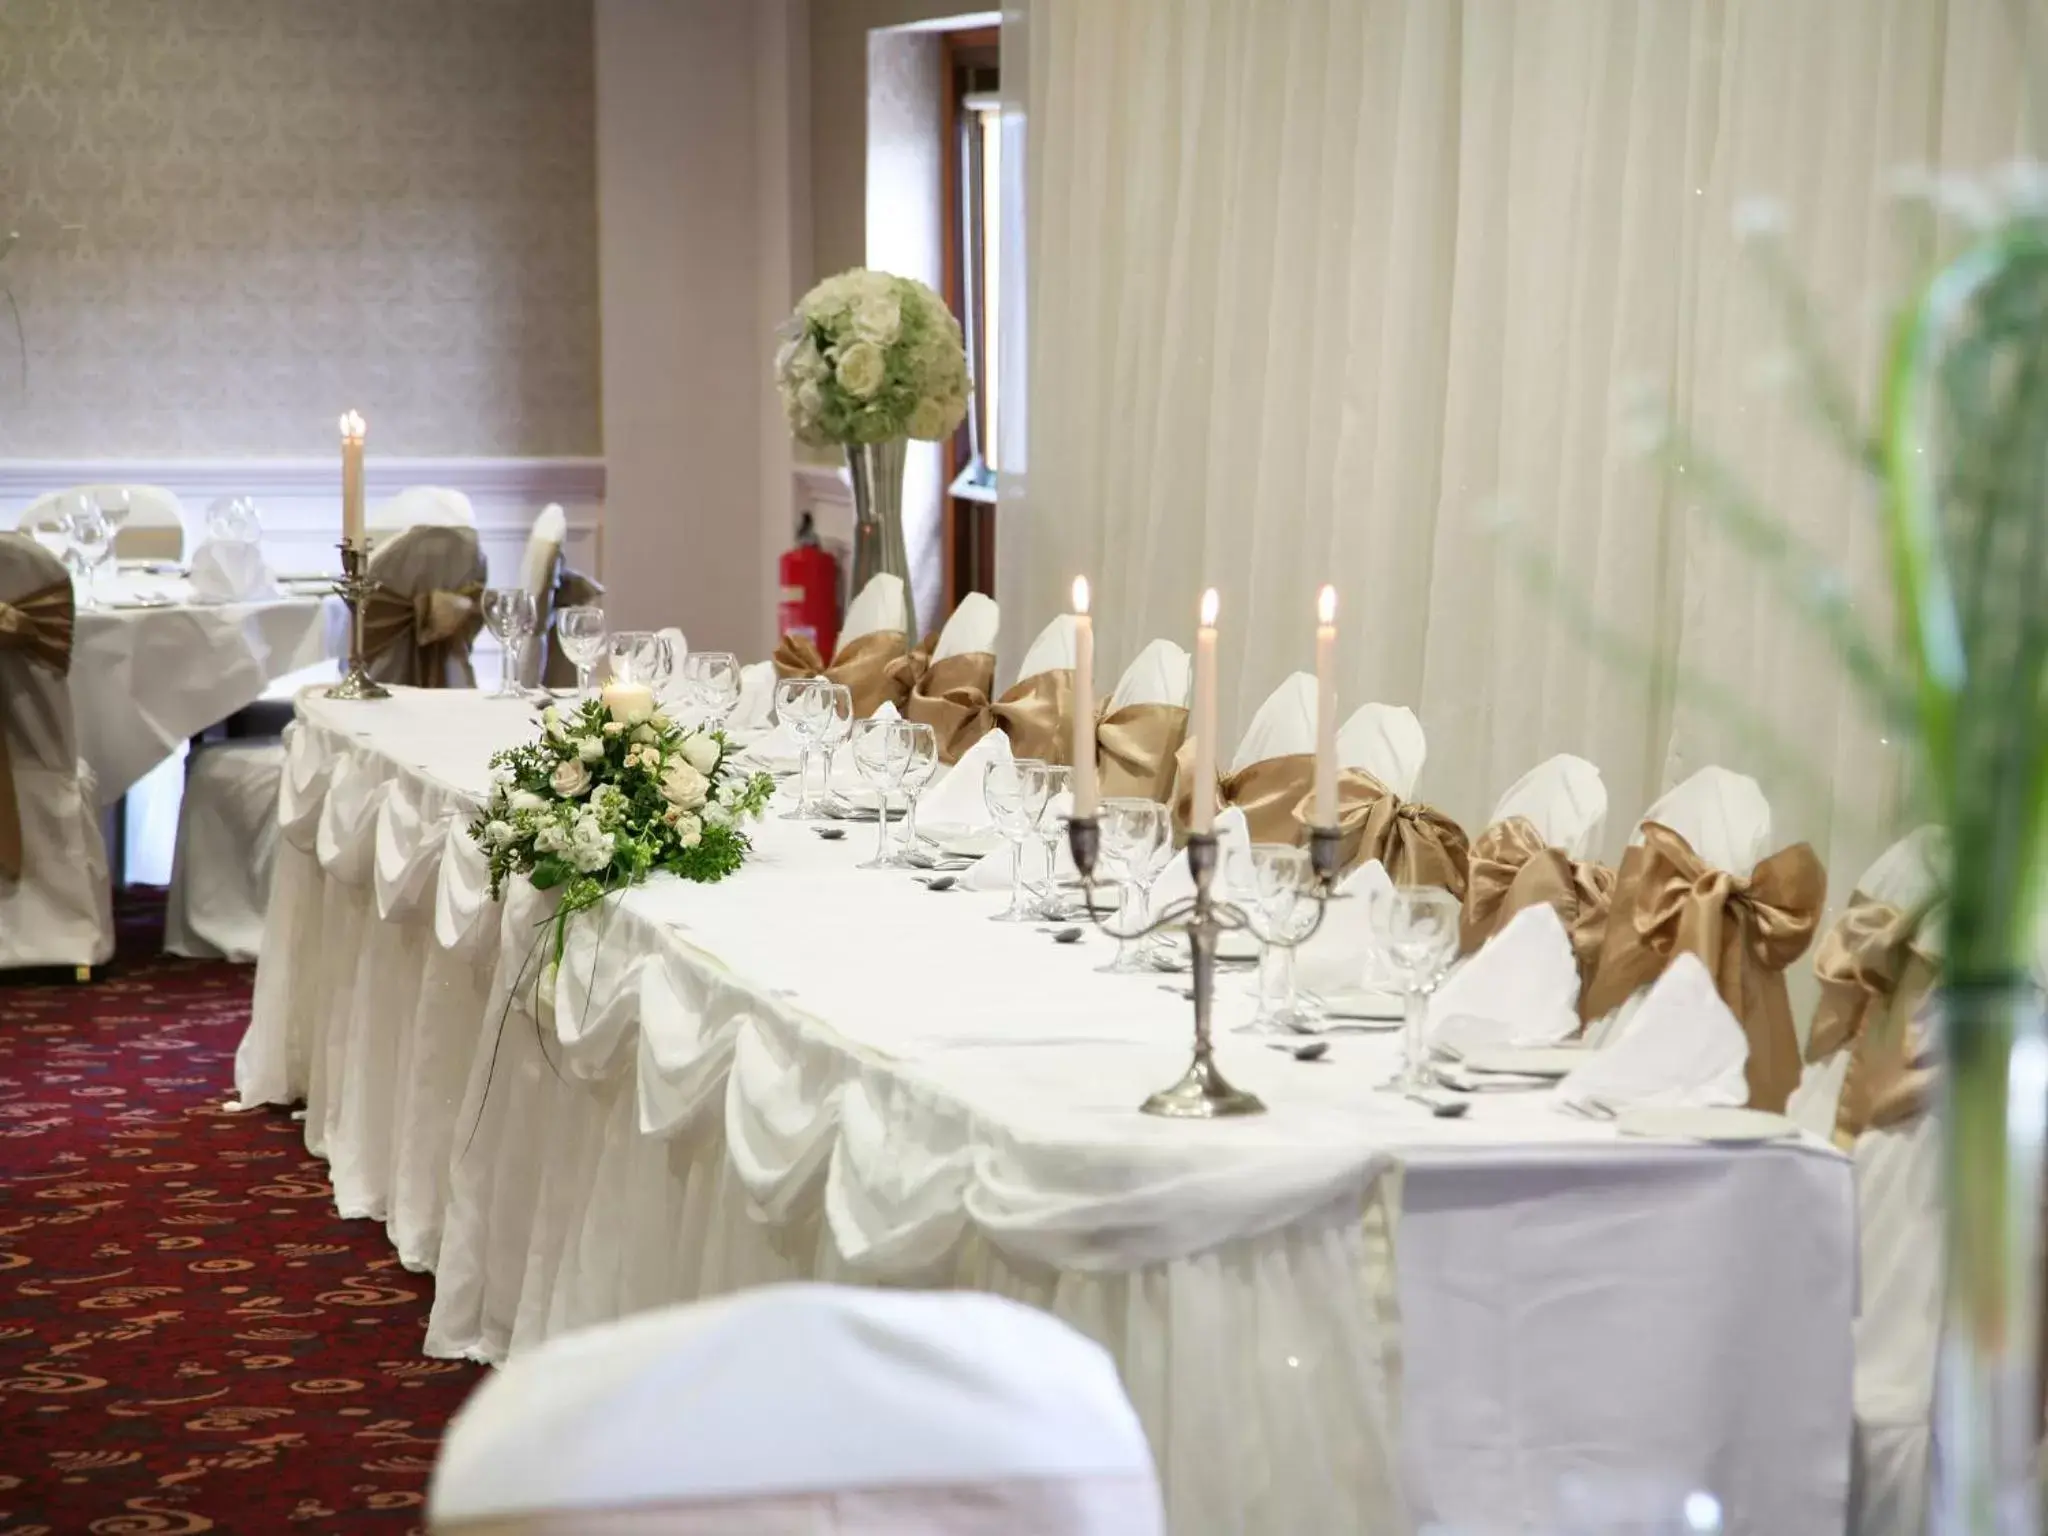 Banquet/Function facilities, Banquet Facilities in Green Isle Hotel, Dublin